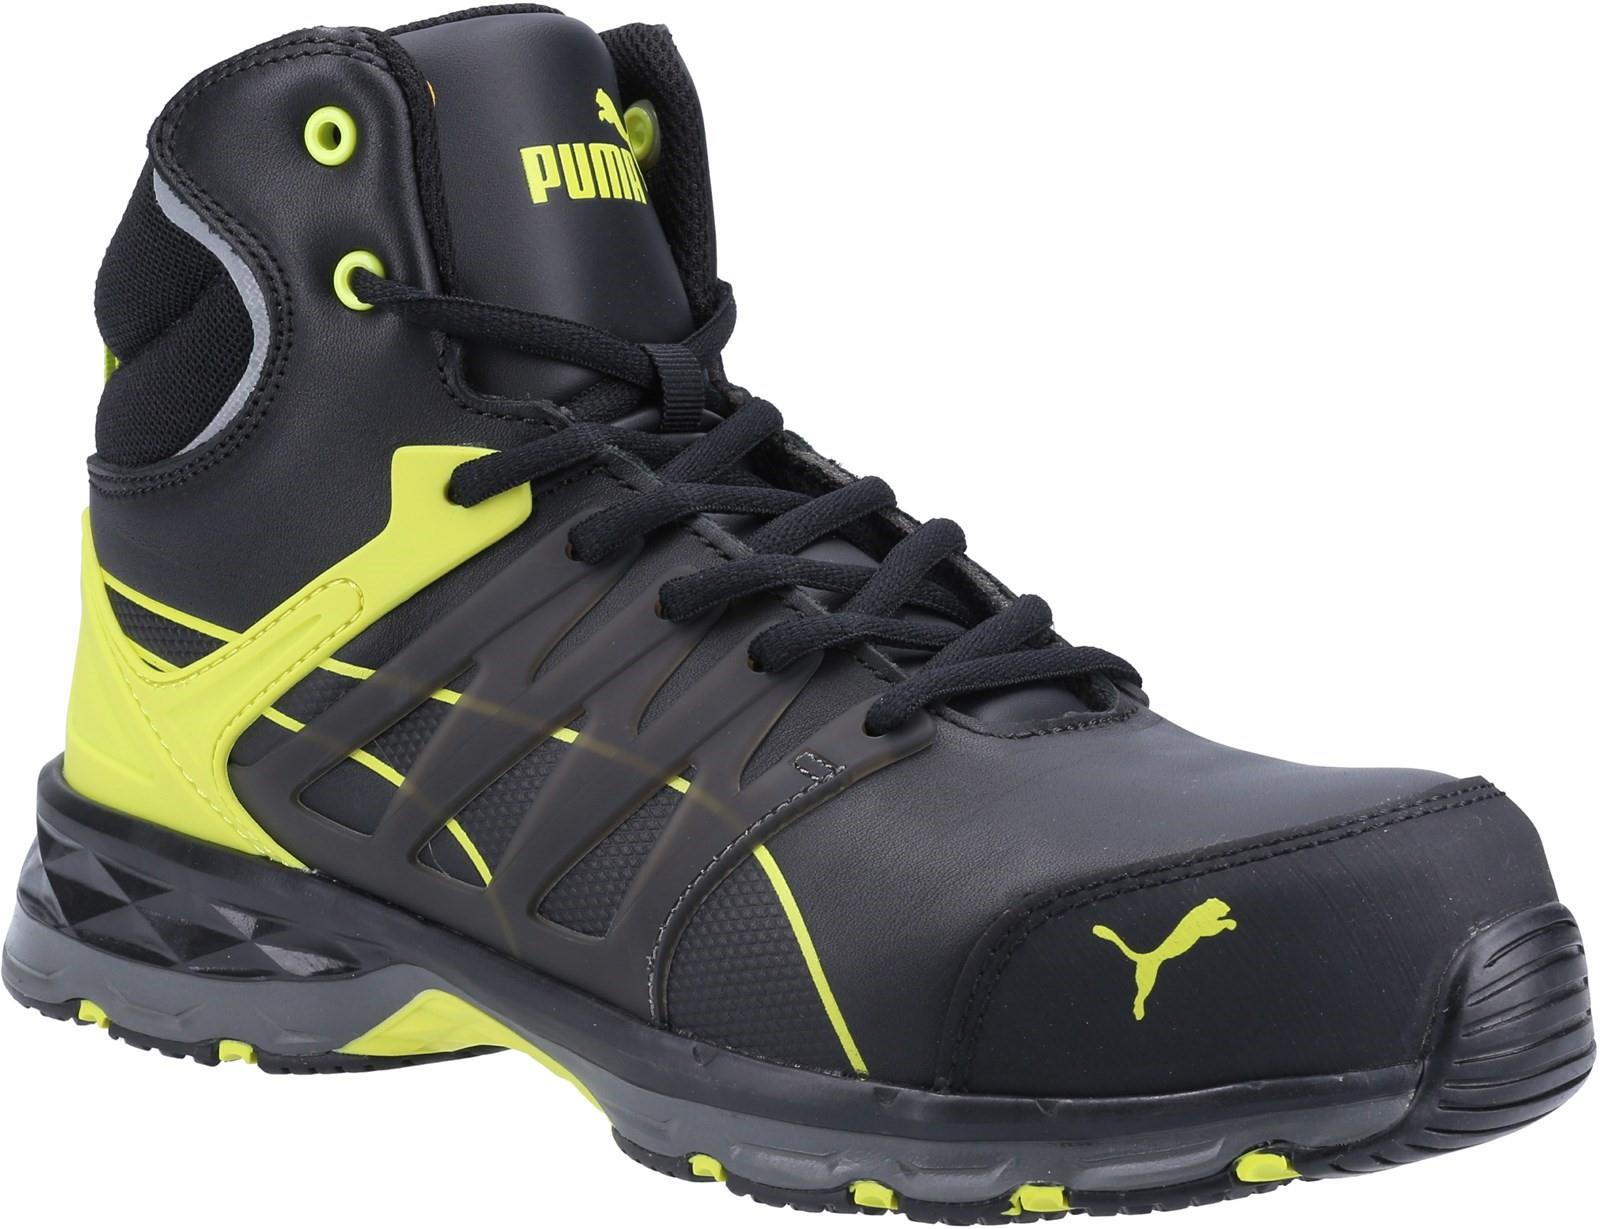 Puma Velocity Mid S3 black/yellow composite toe-cap/midsole work safety boots